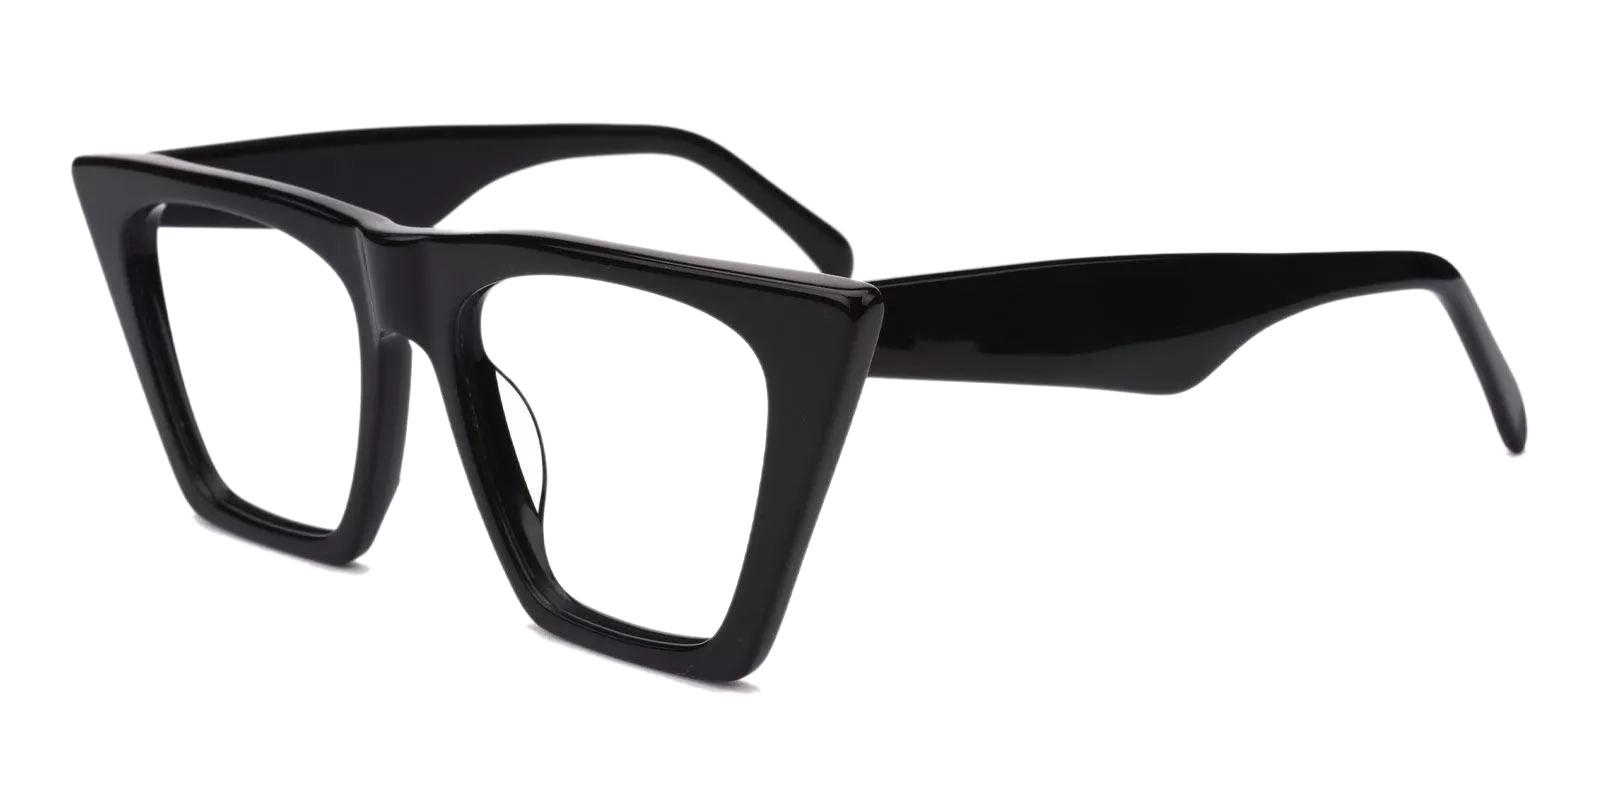 Haley Black Acetate UniversalBridgeFit , Fashion , Eyeglasses Frames from ABBE Glasses